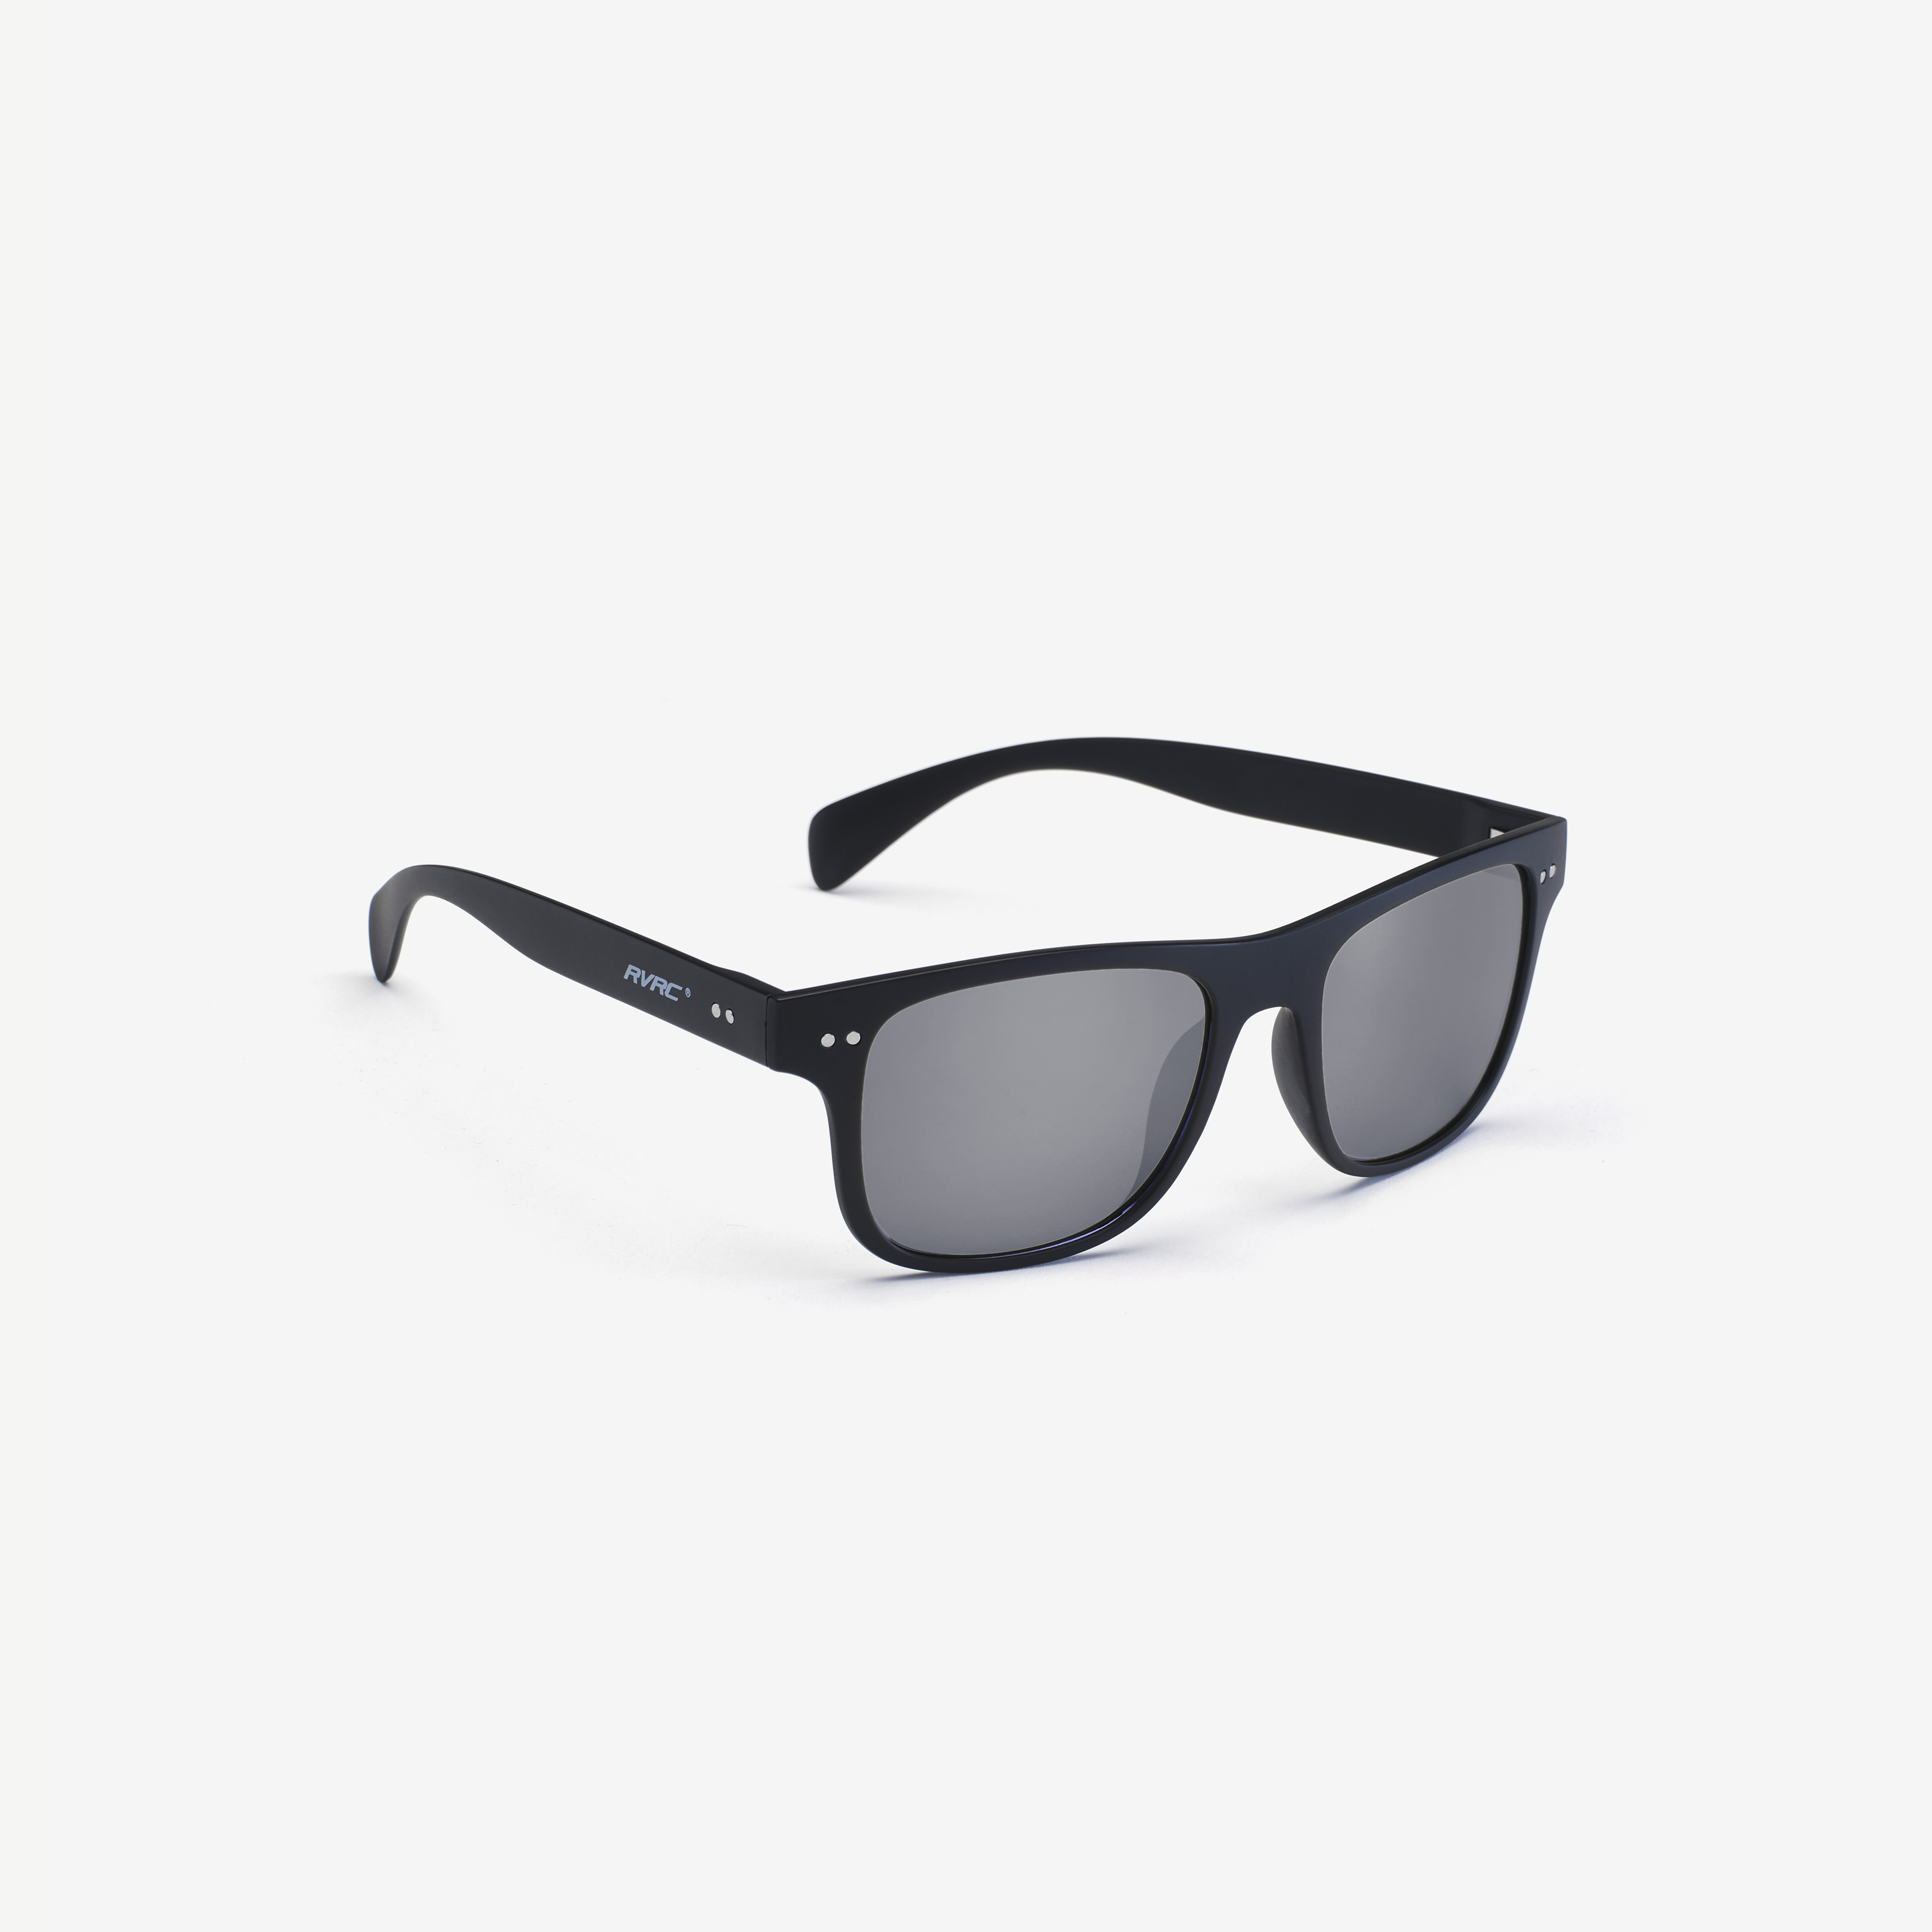 Orion Polarized Sunglasses Black/Smoke Grey